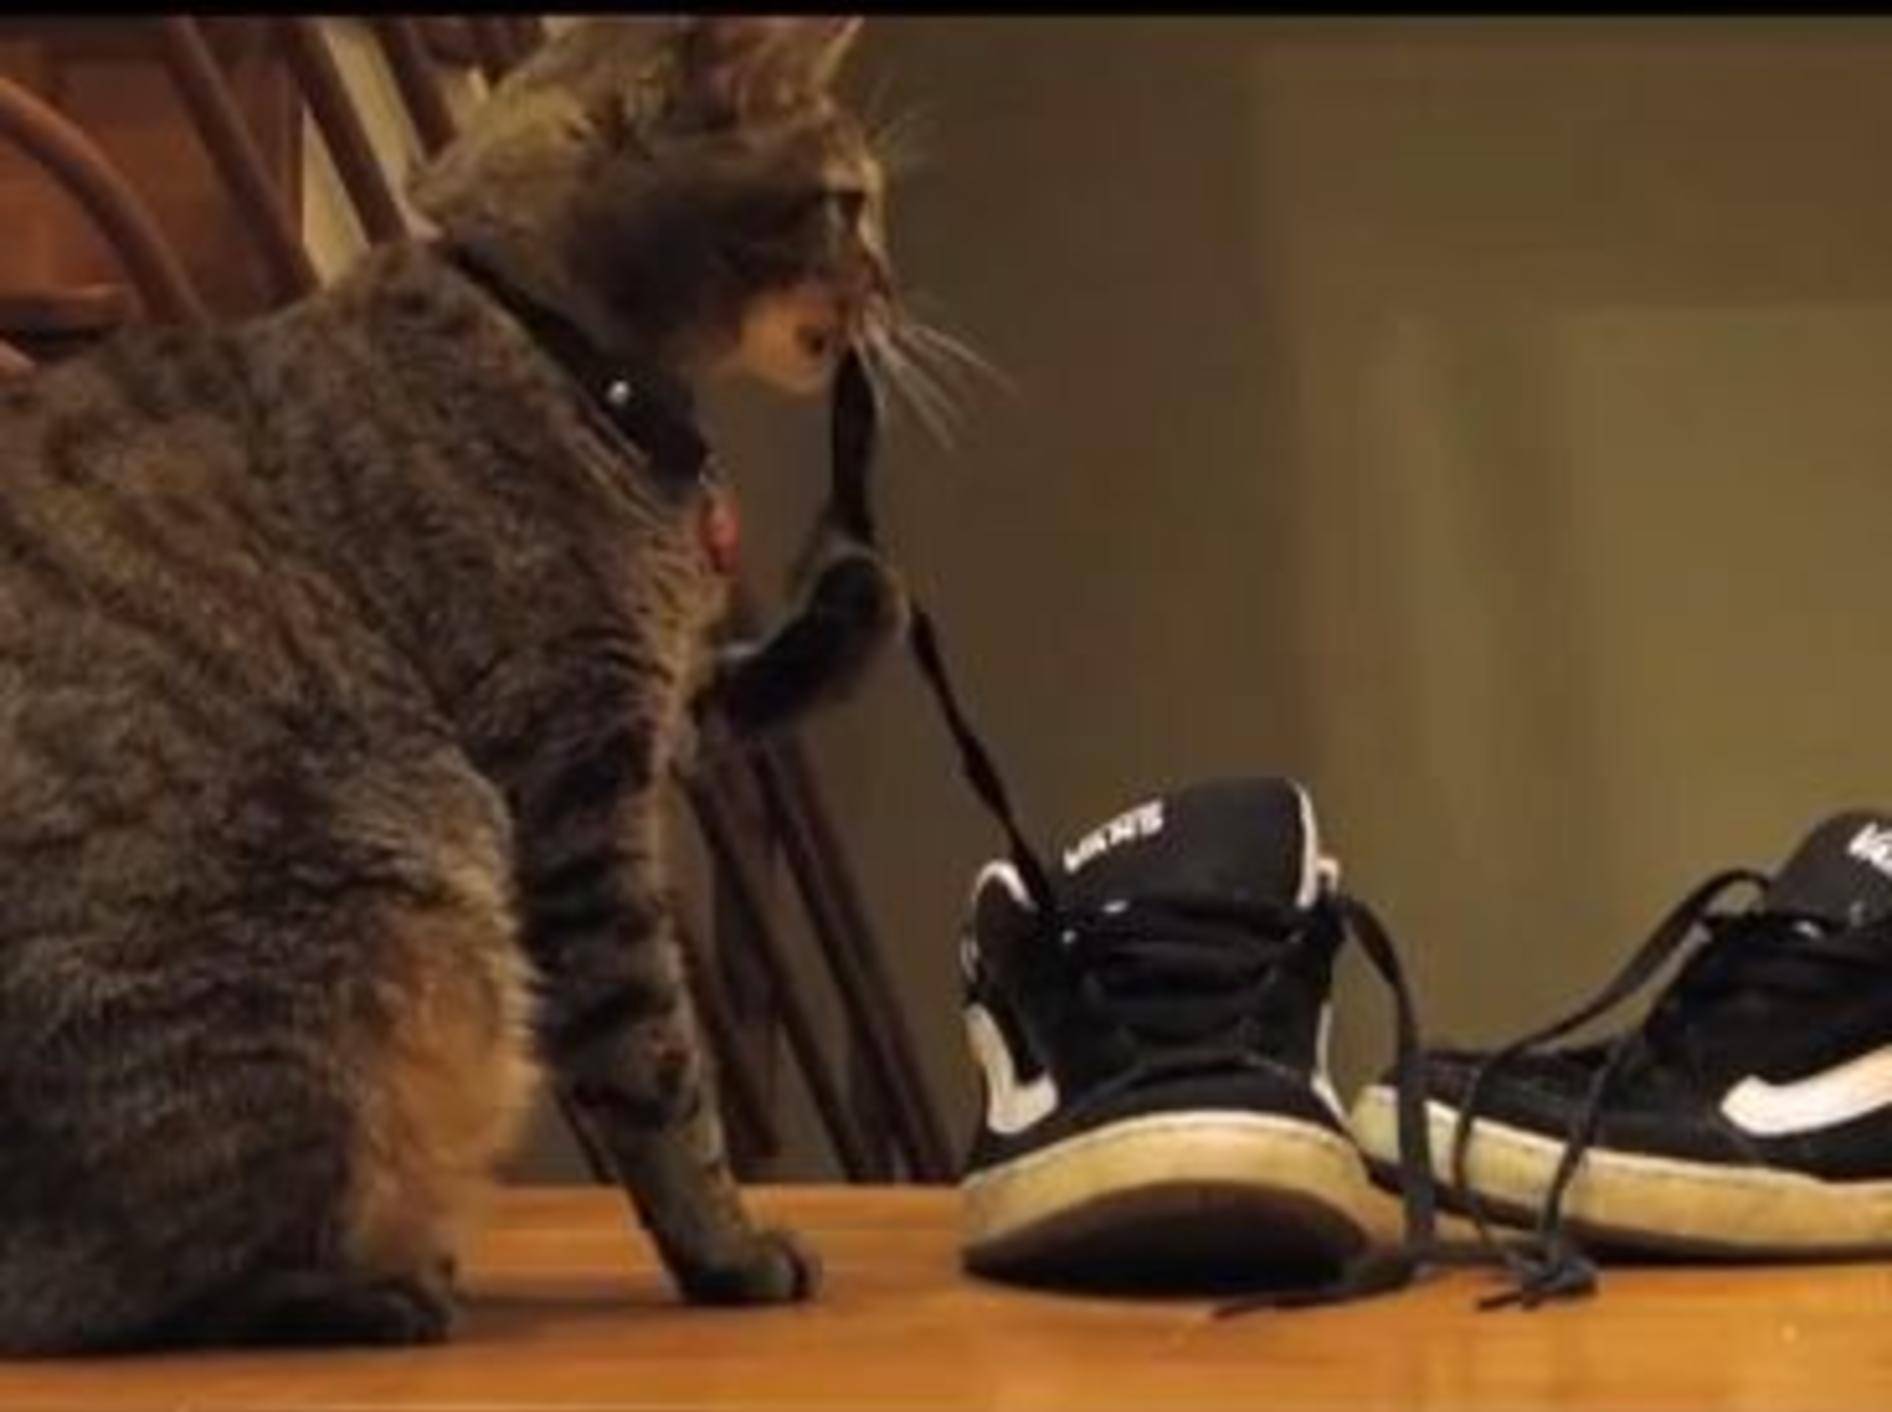 Katze vs. Schuhbänder: Kennt man, oder? – Bild: Youtube / TheMeanKitty